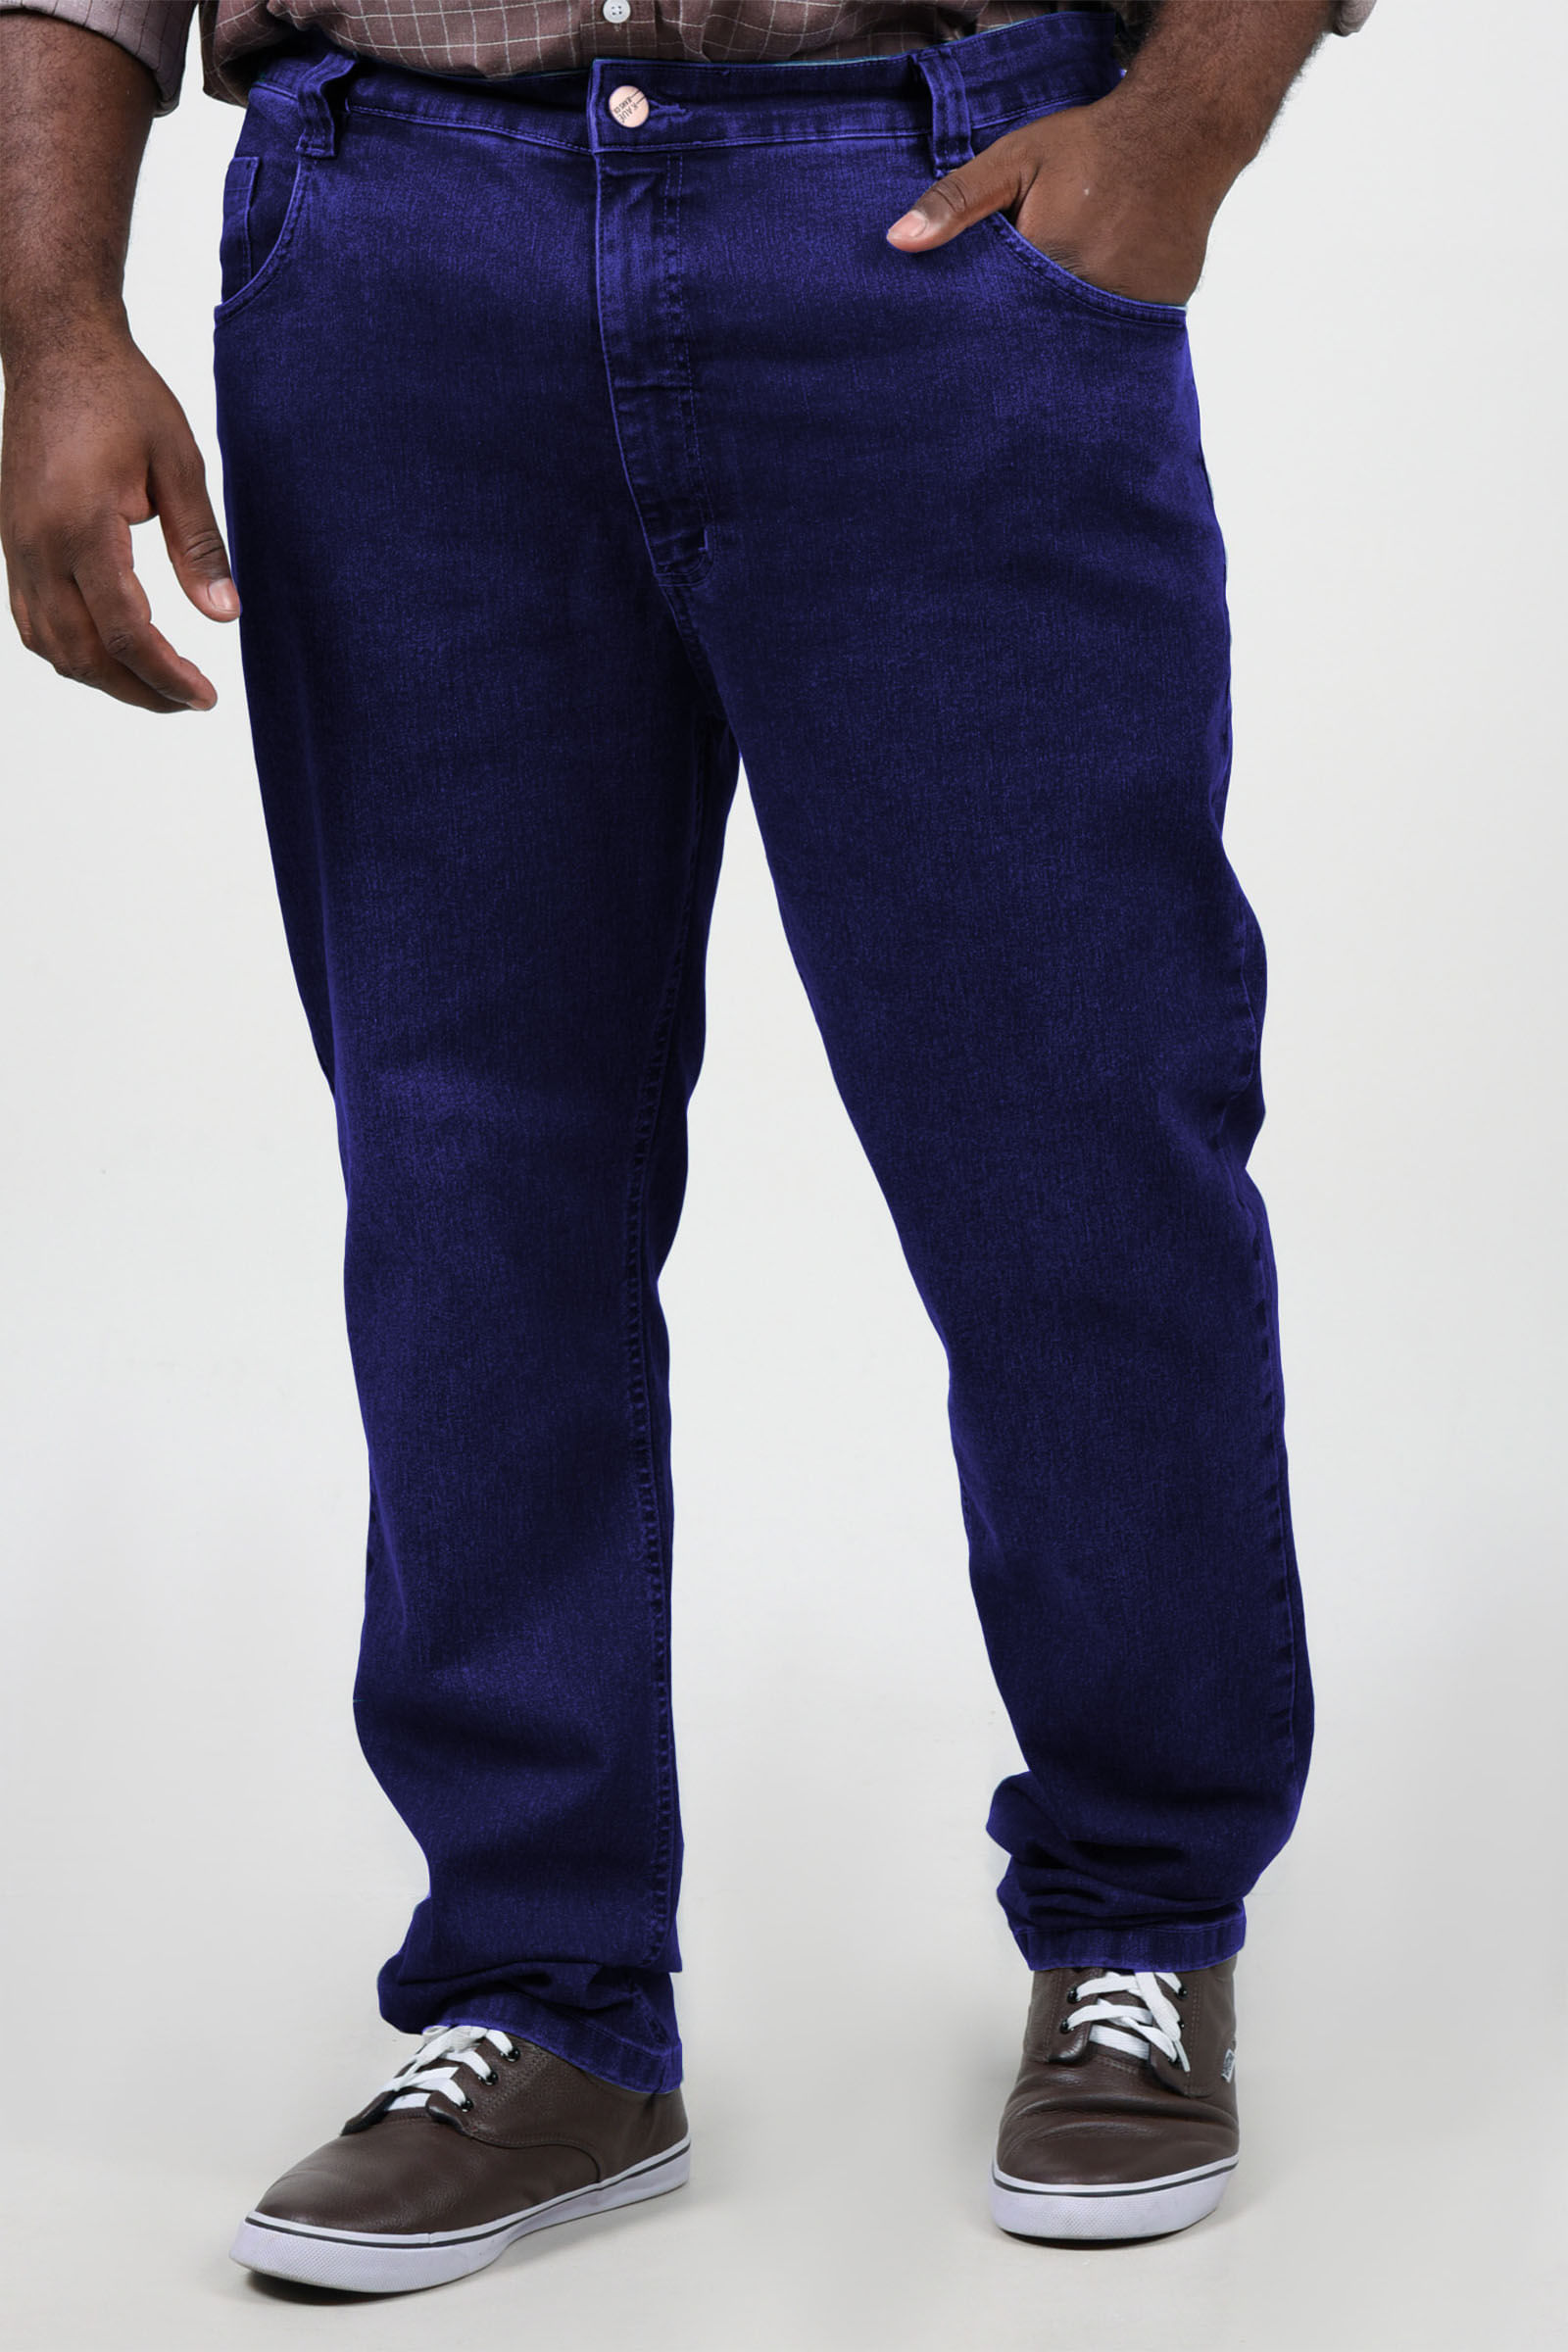 Calca-reta-jeans-blue-plus-size_0102_1